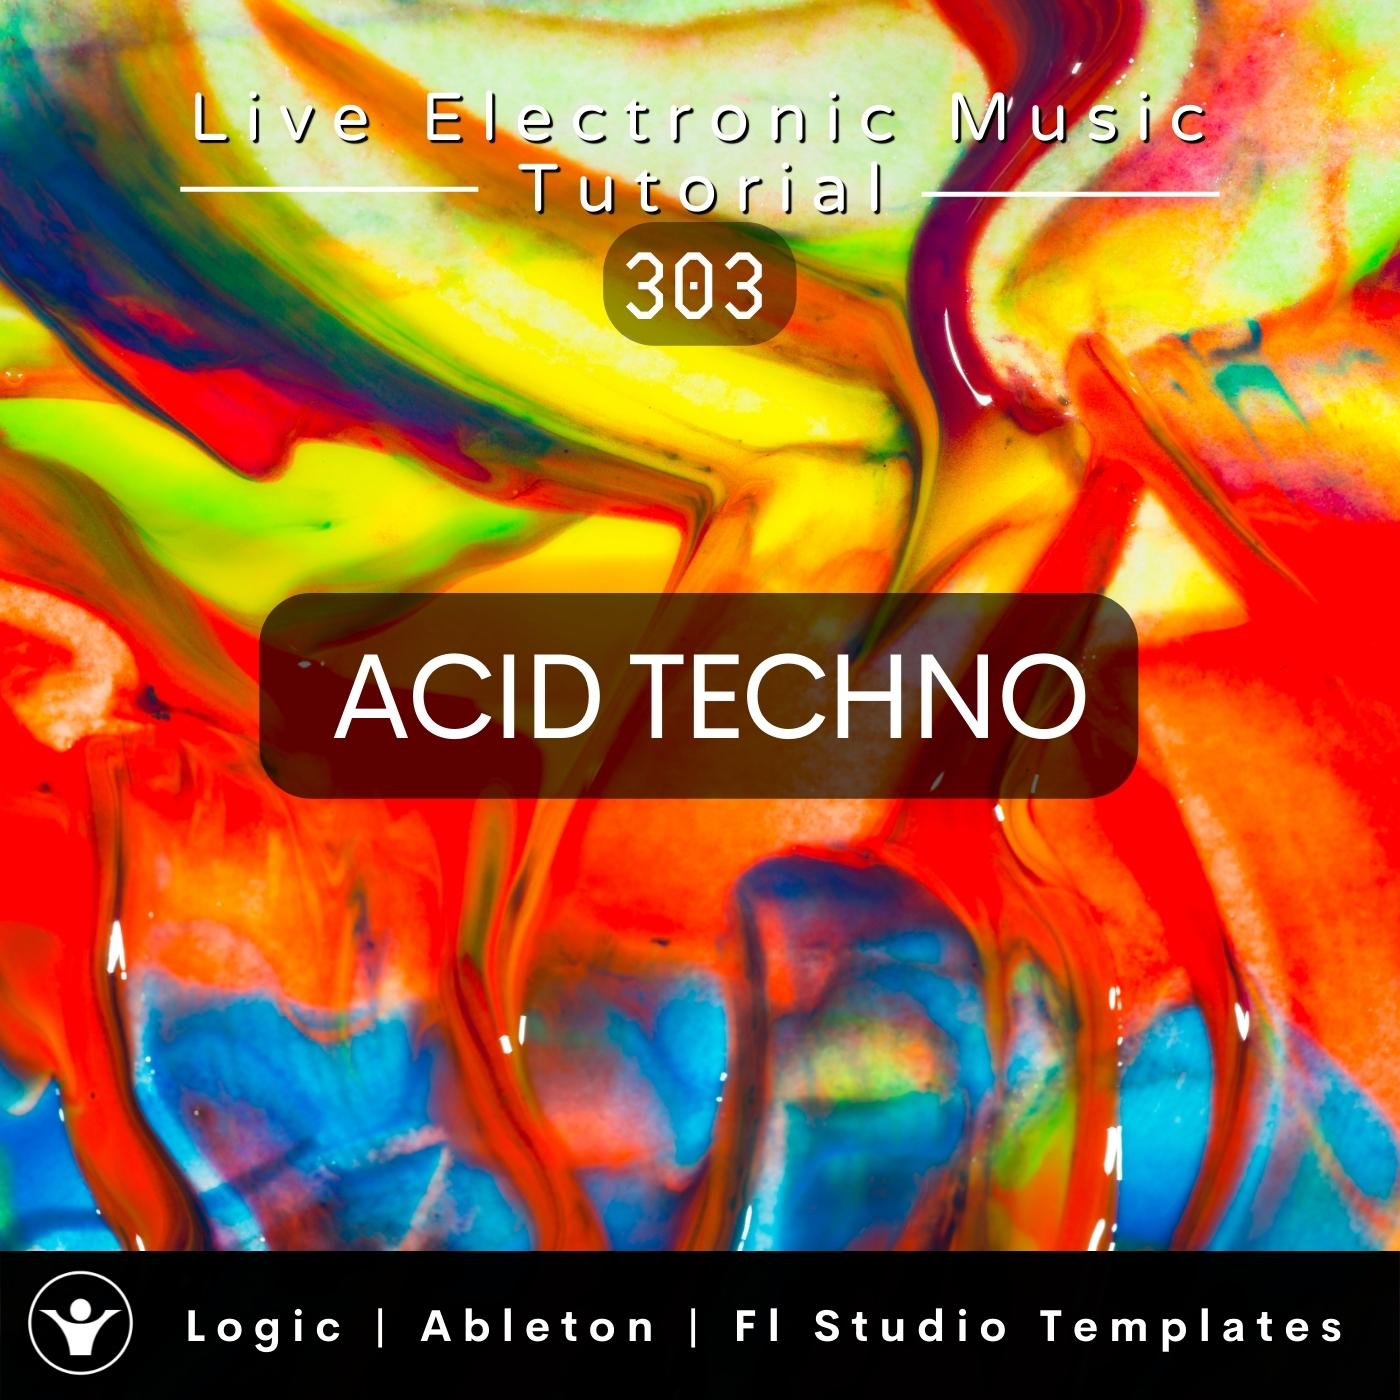 Acid Techno Template for Logic, Ableton, FL Studio + Free Tutorial | Live  Electronic Music 303